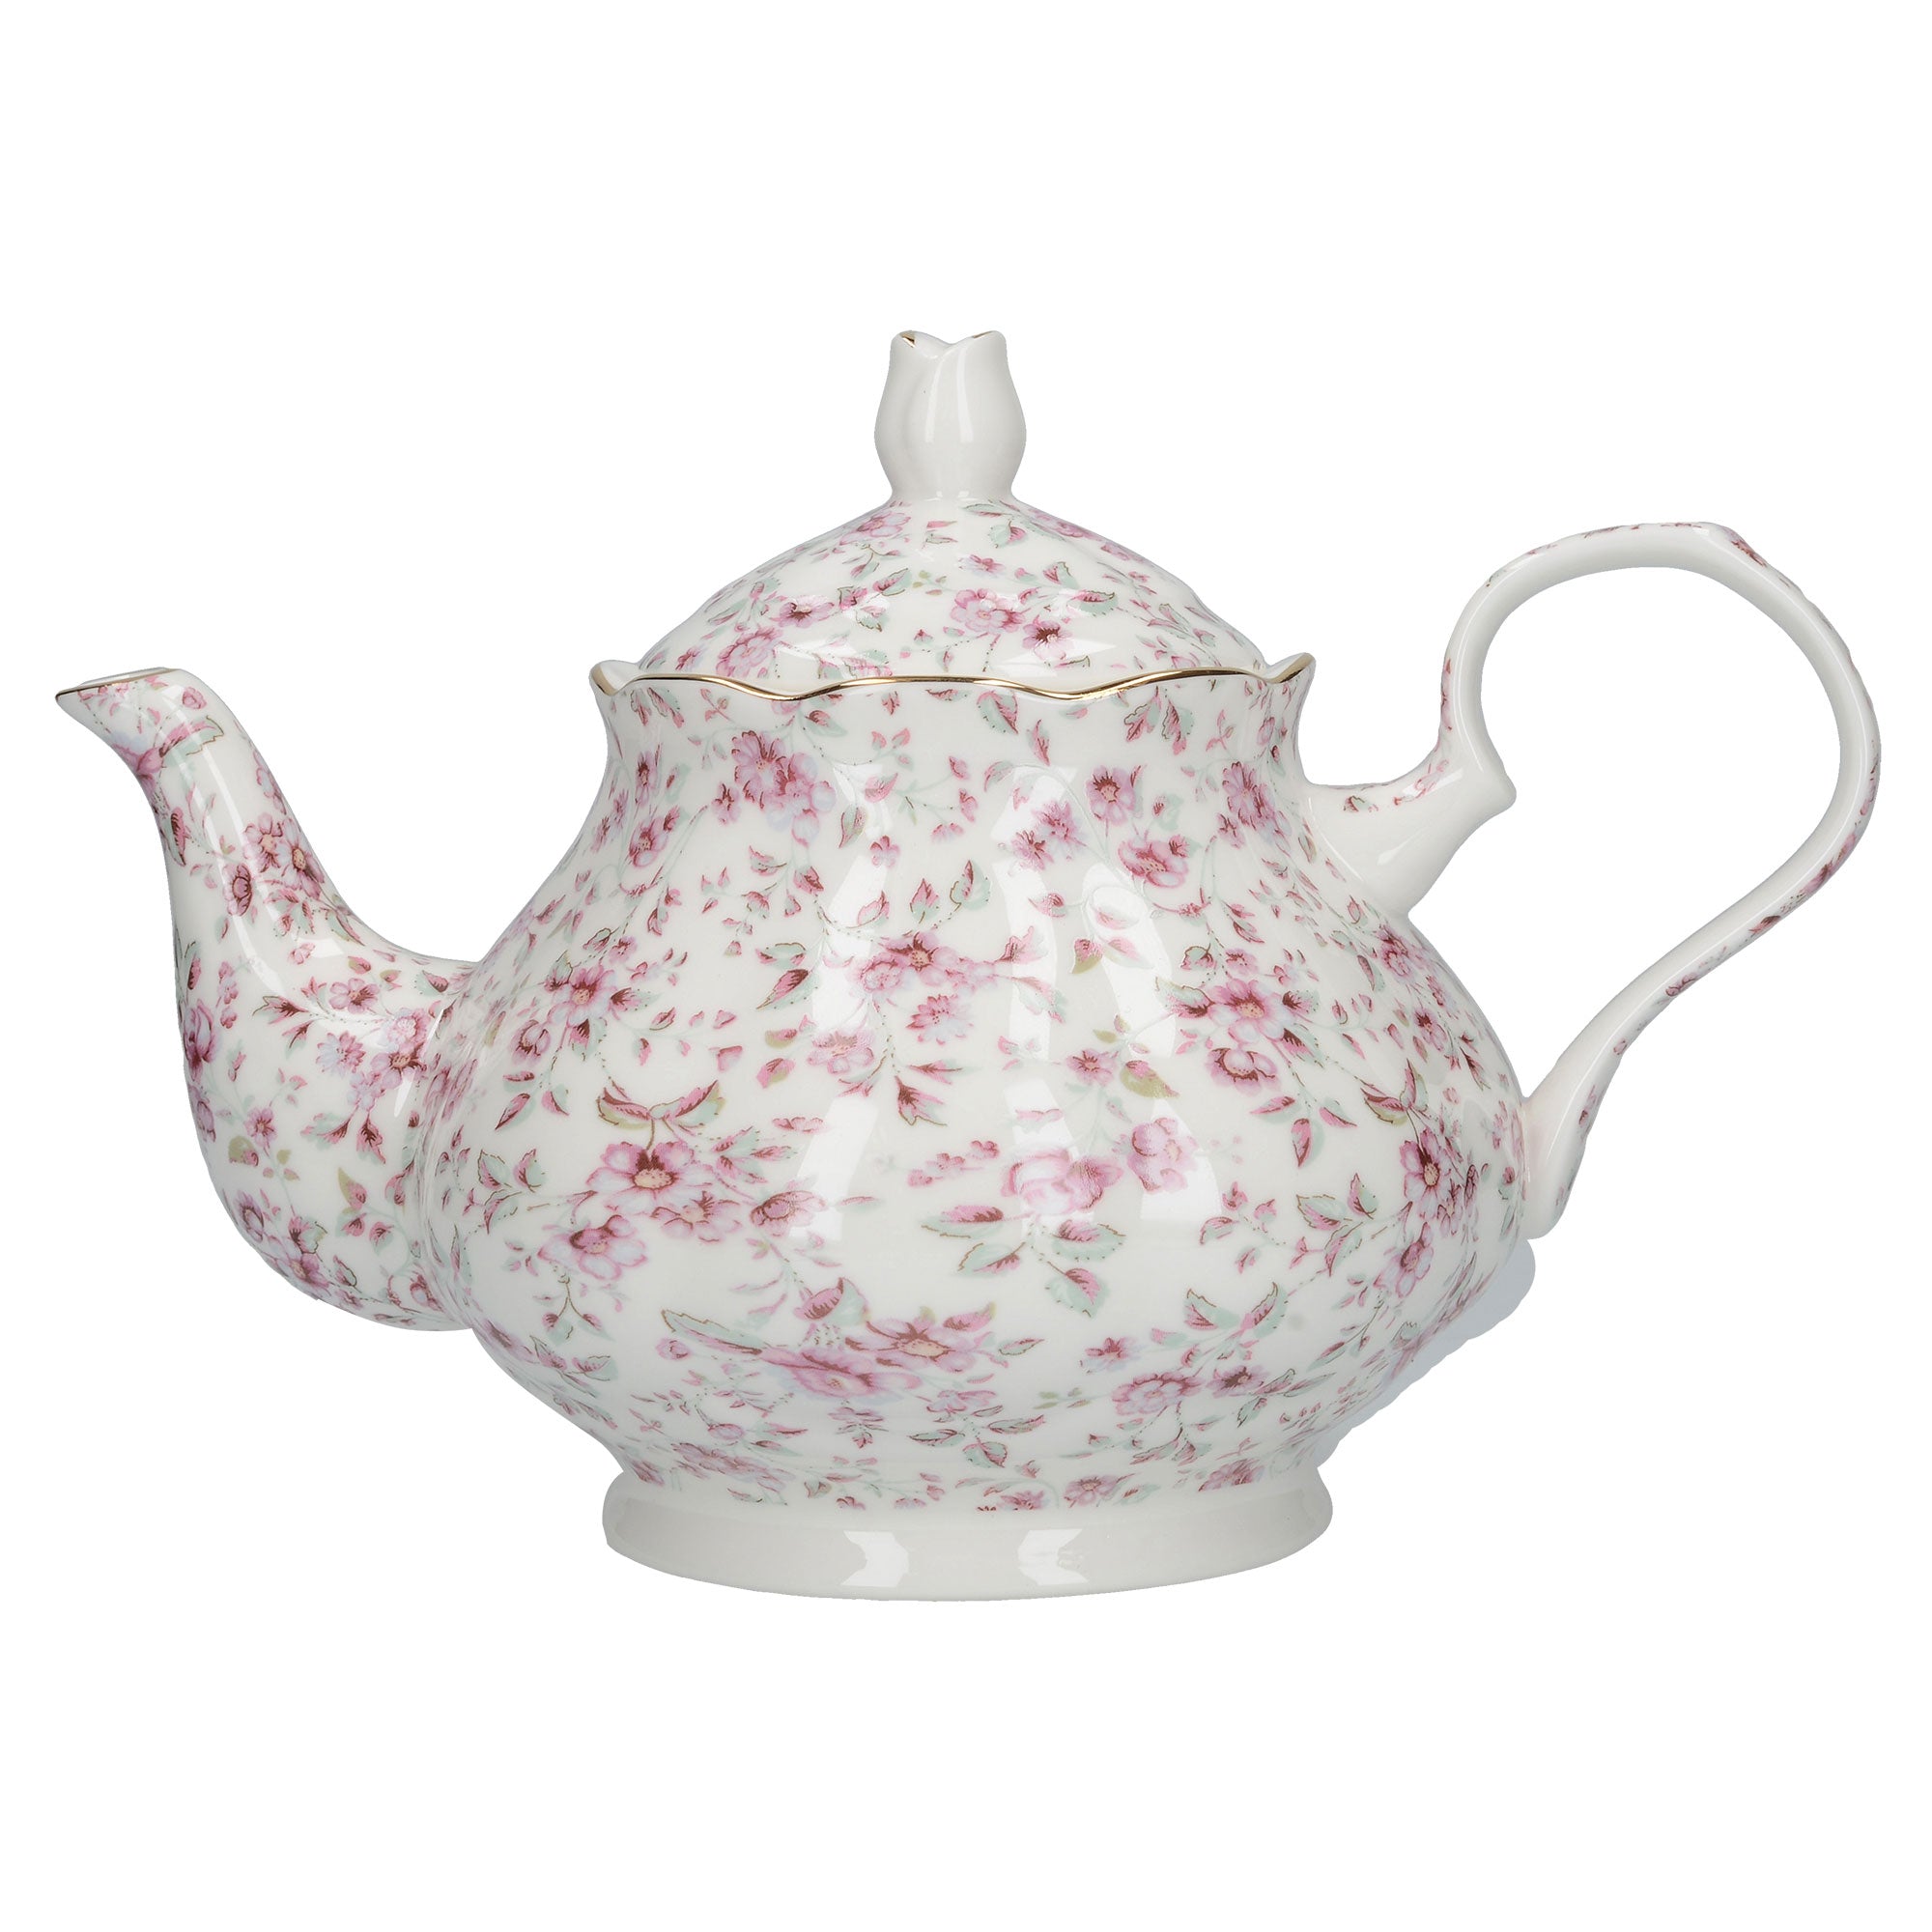 Ditsy Floral - Tea Pot with Sugar Bowl & Creamer Set